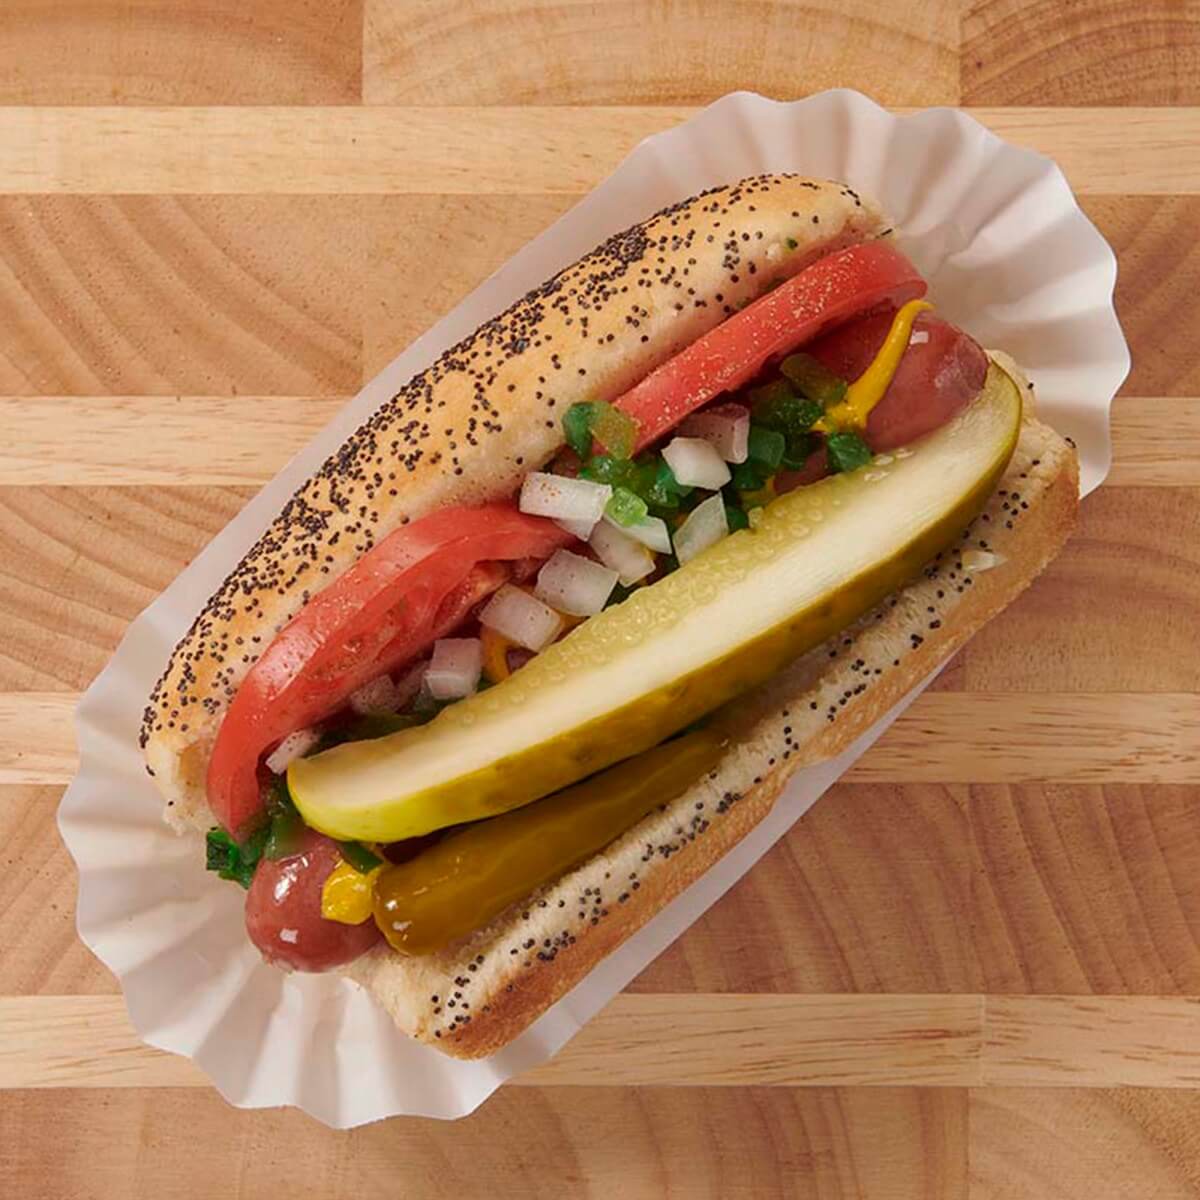 Hot dog with pickes and tomatoes at Portillos. 